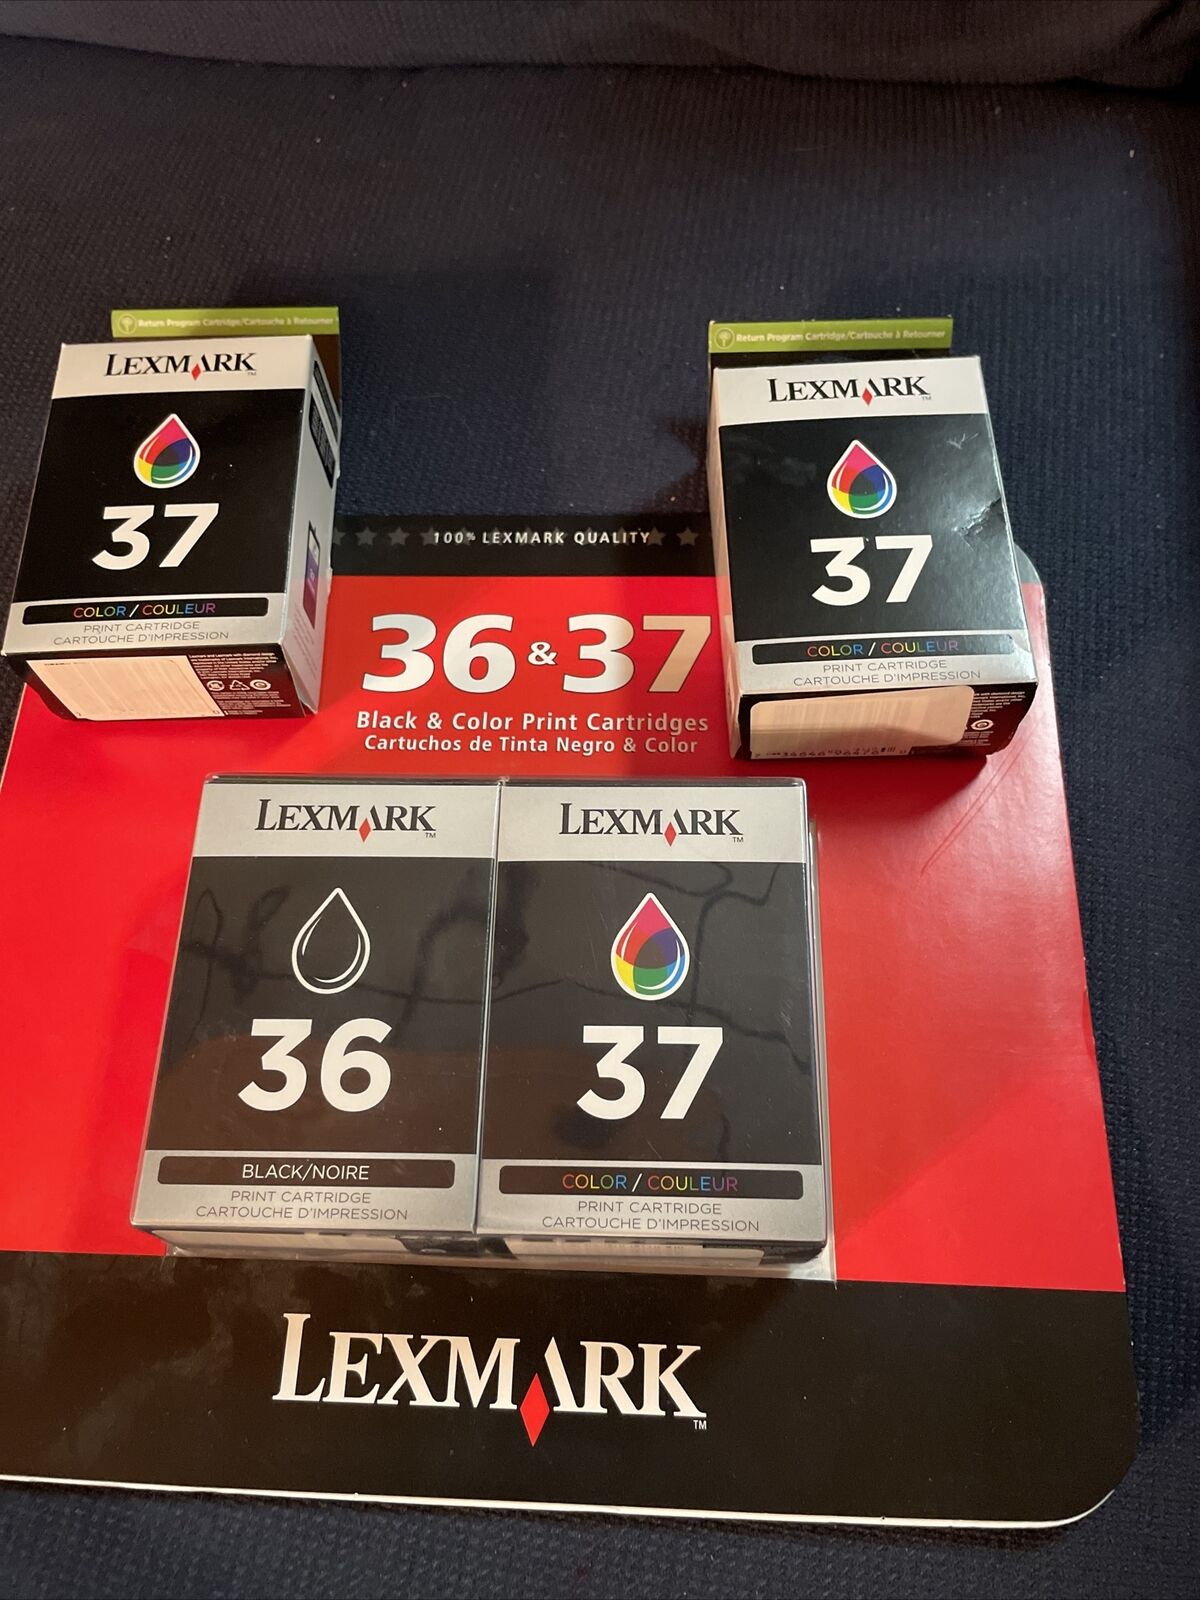 3 Lexmark Ink Cartridge 37 Color and 1 Lexmark Ink Cartridge 36 Black